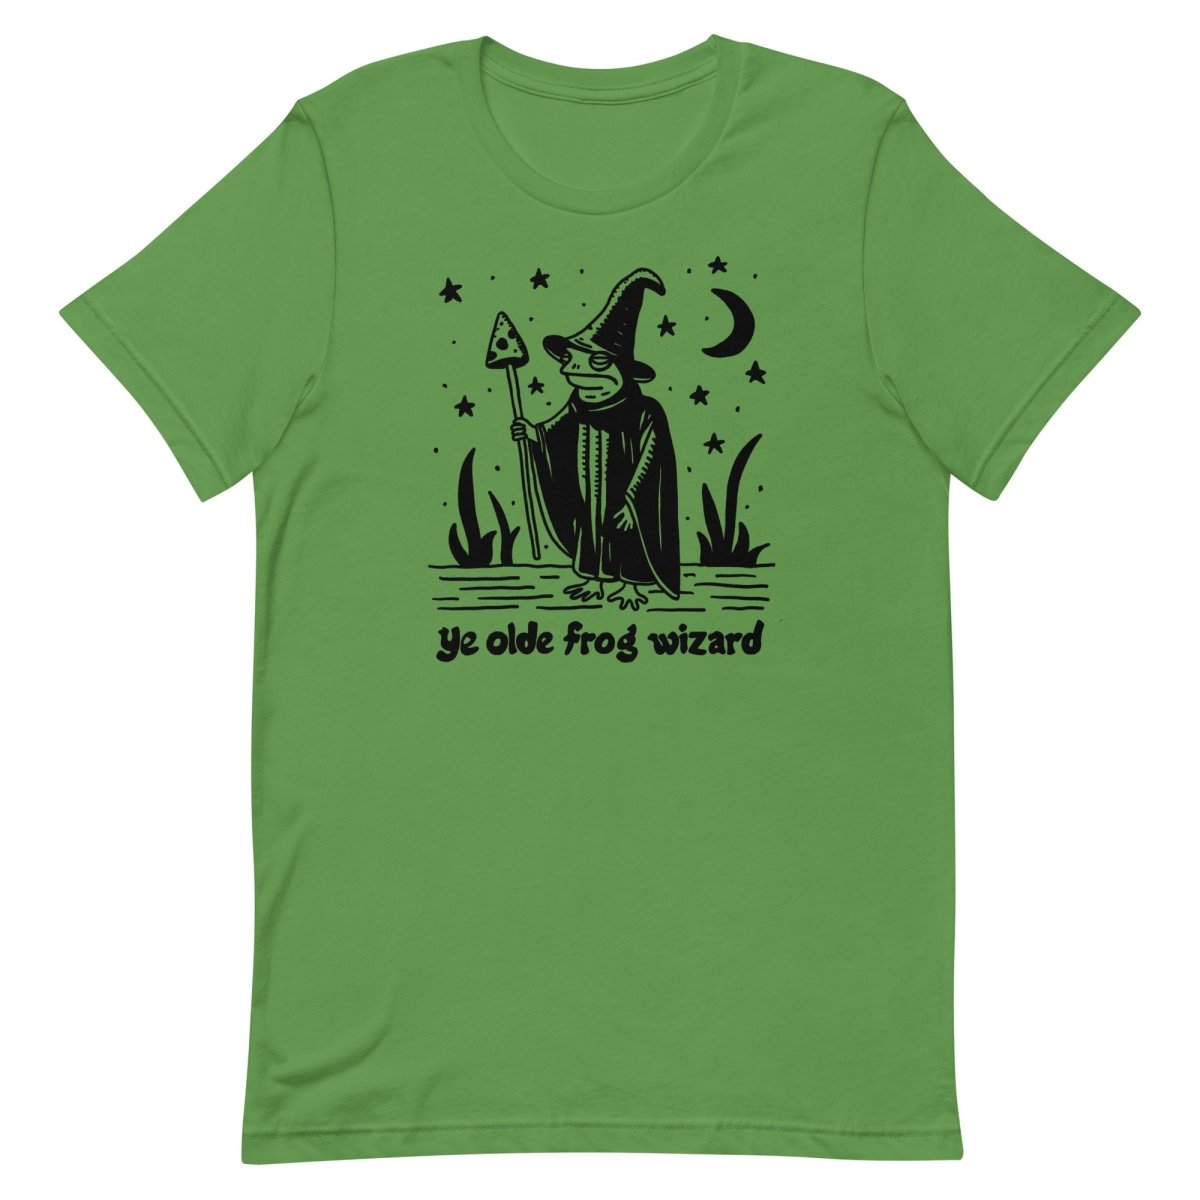 Ye olde frog wizard tshirt - Pretty Bad Co.